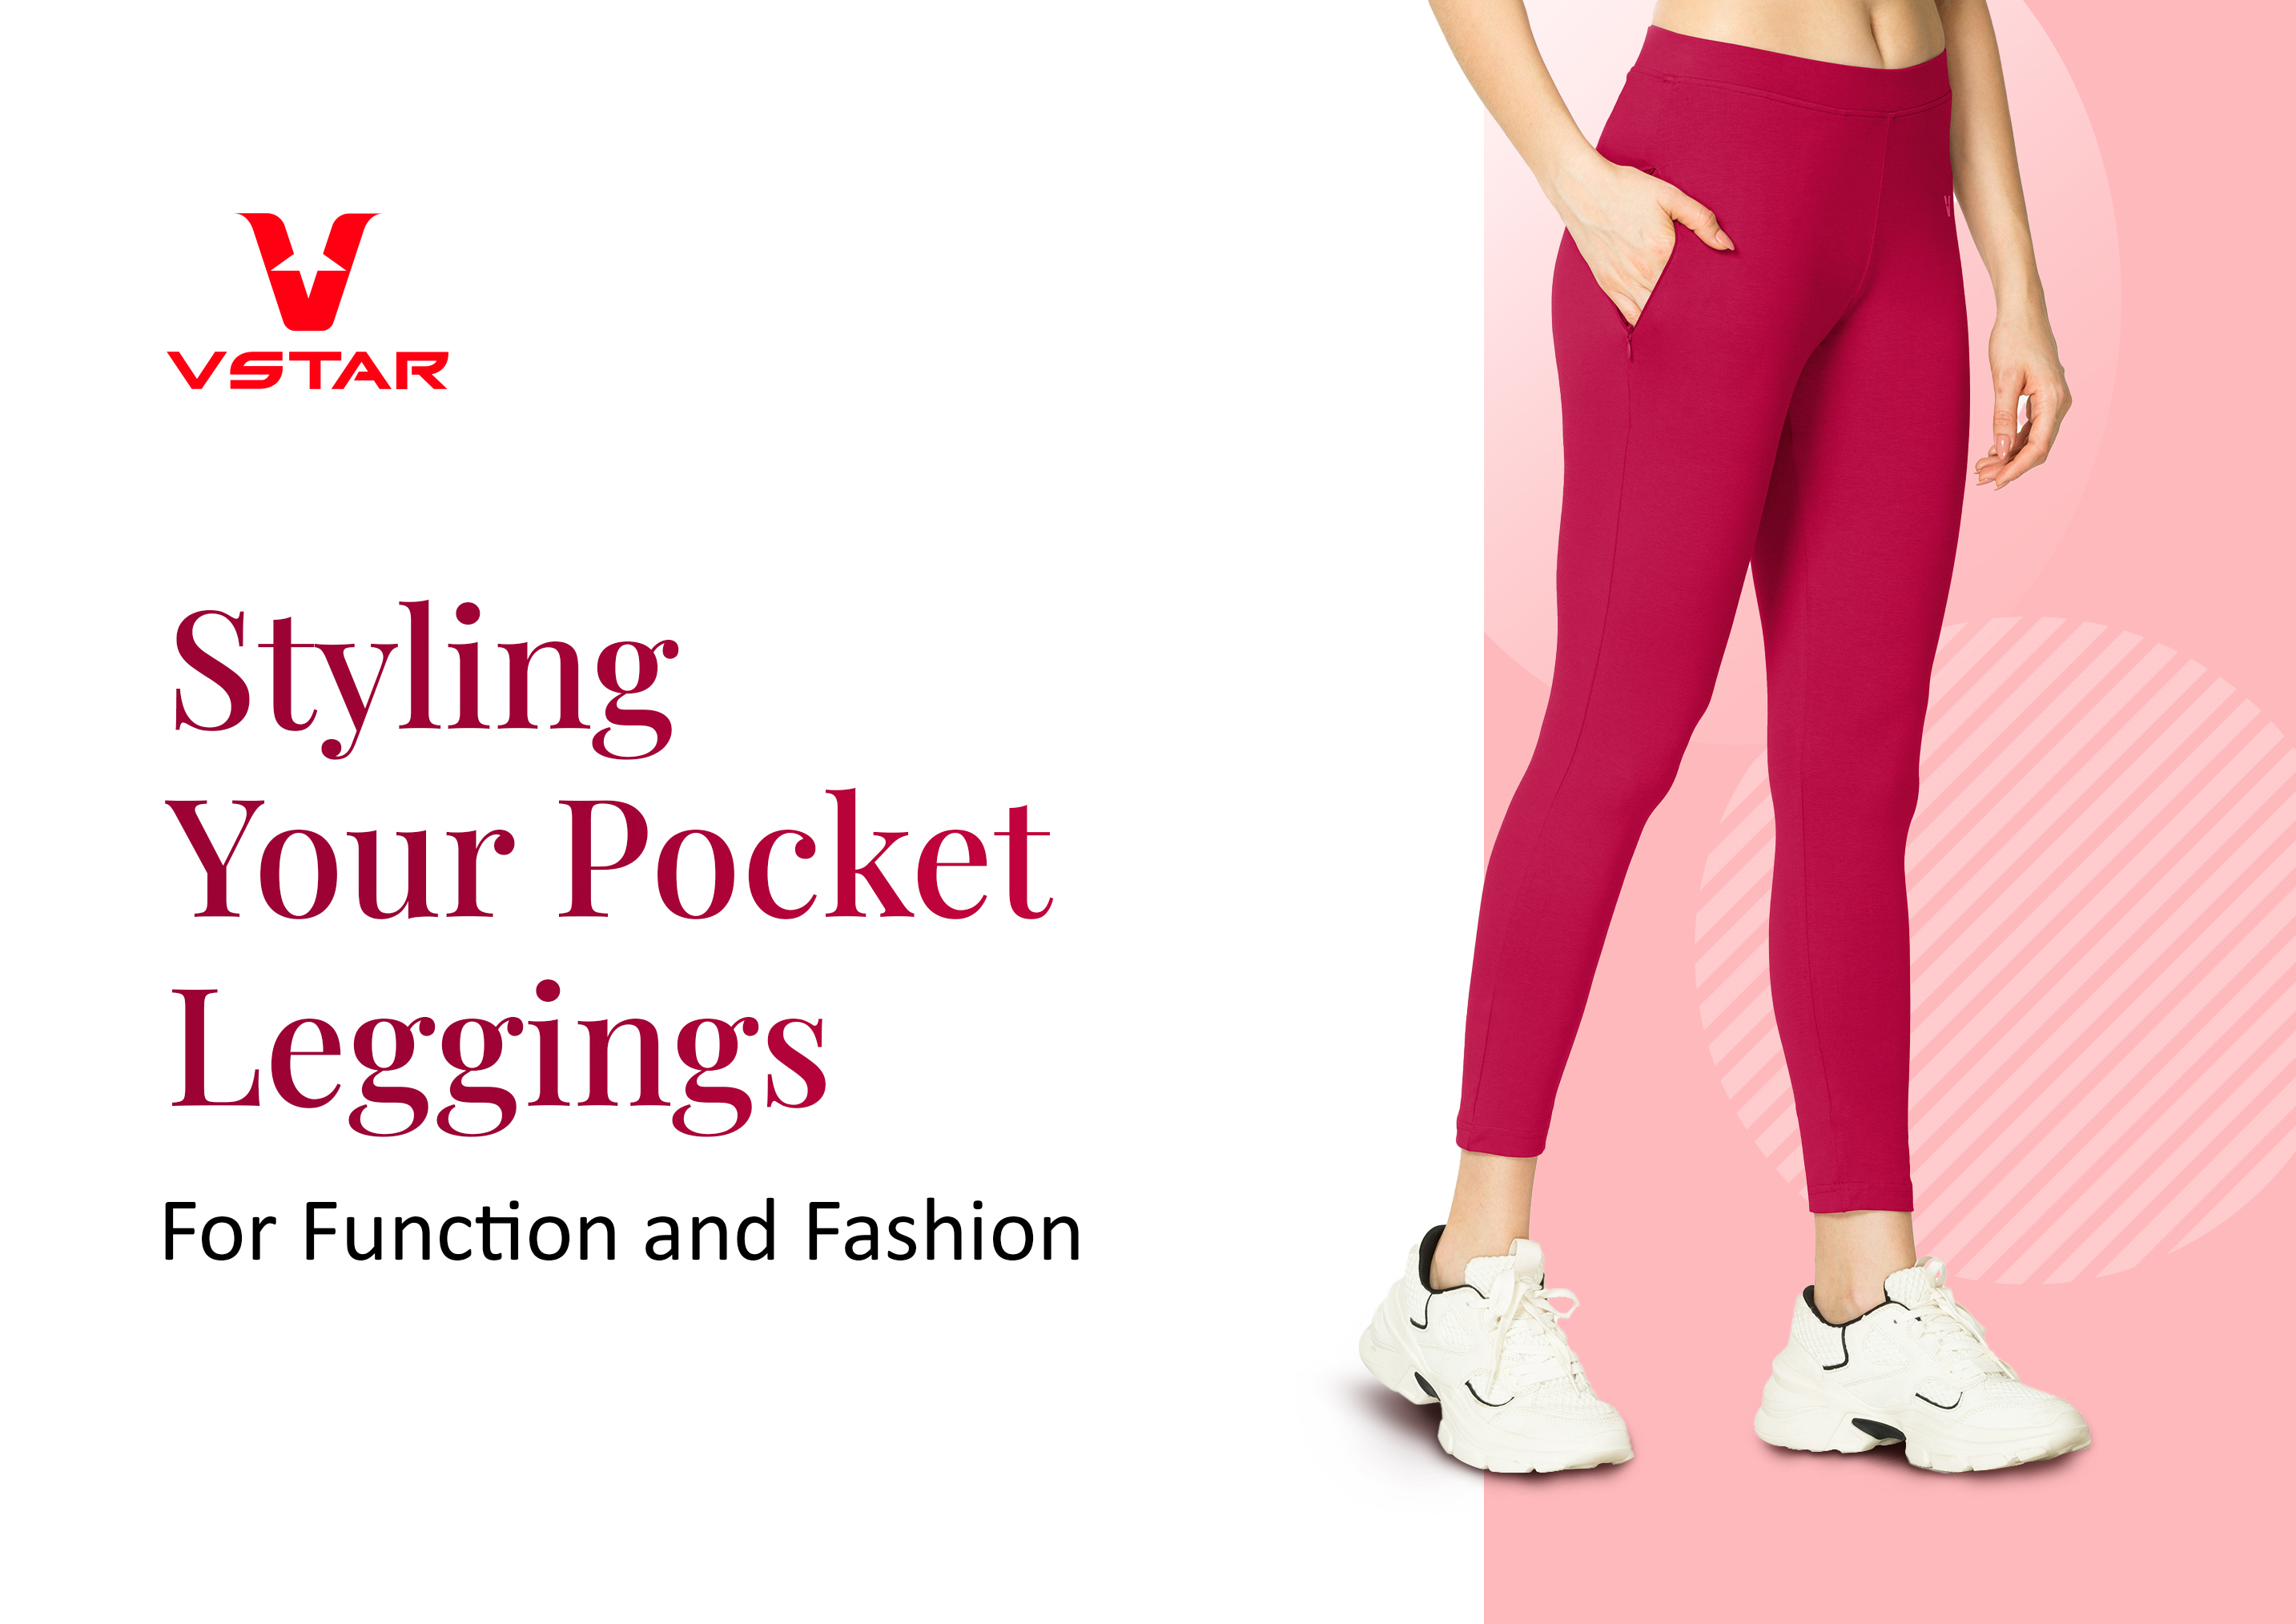 Women's High Rise Tight Yoga Pants Buttery Soft Legging With Hidden Pocket  - Walmart.com